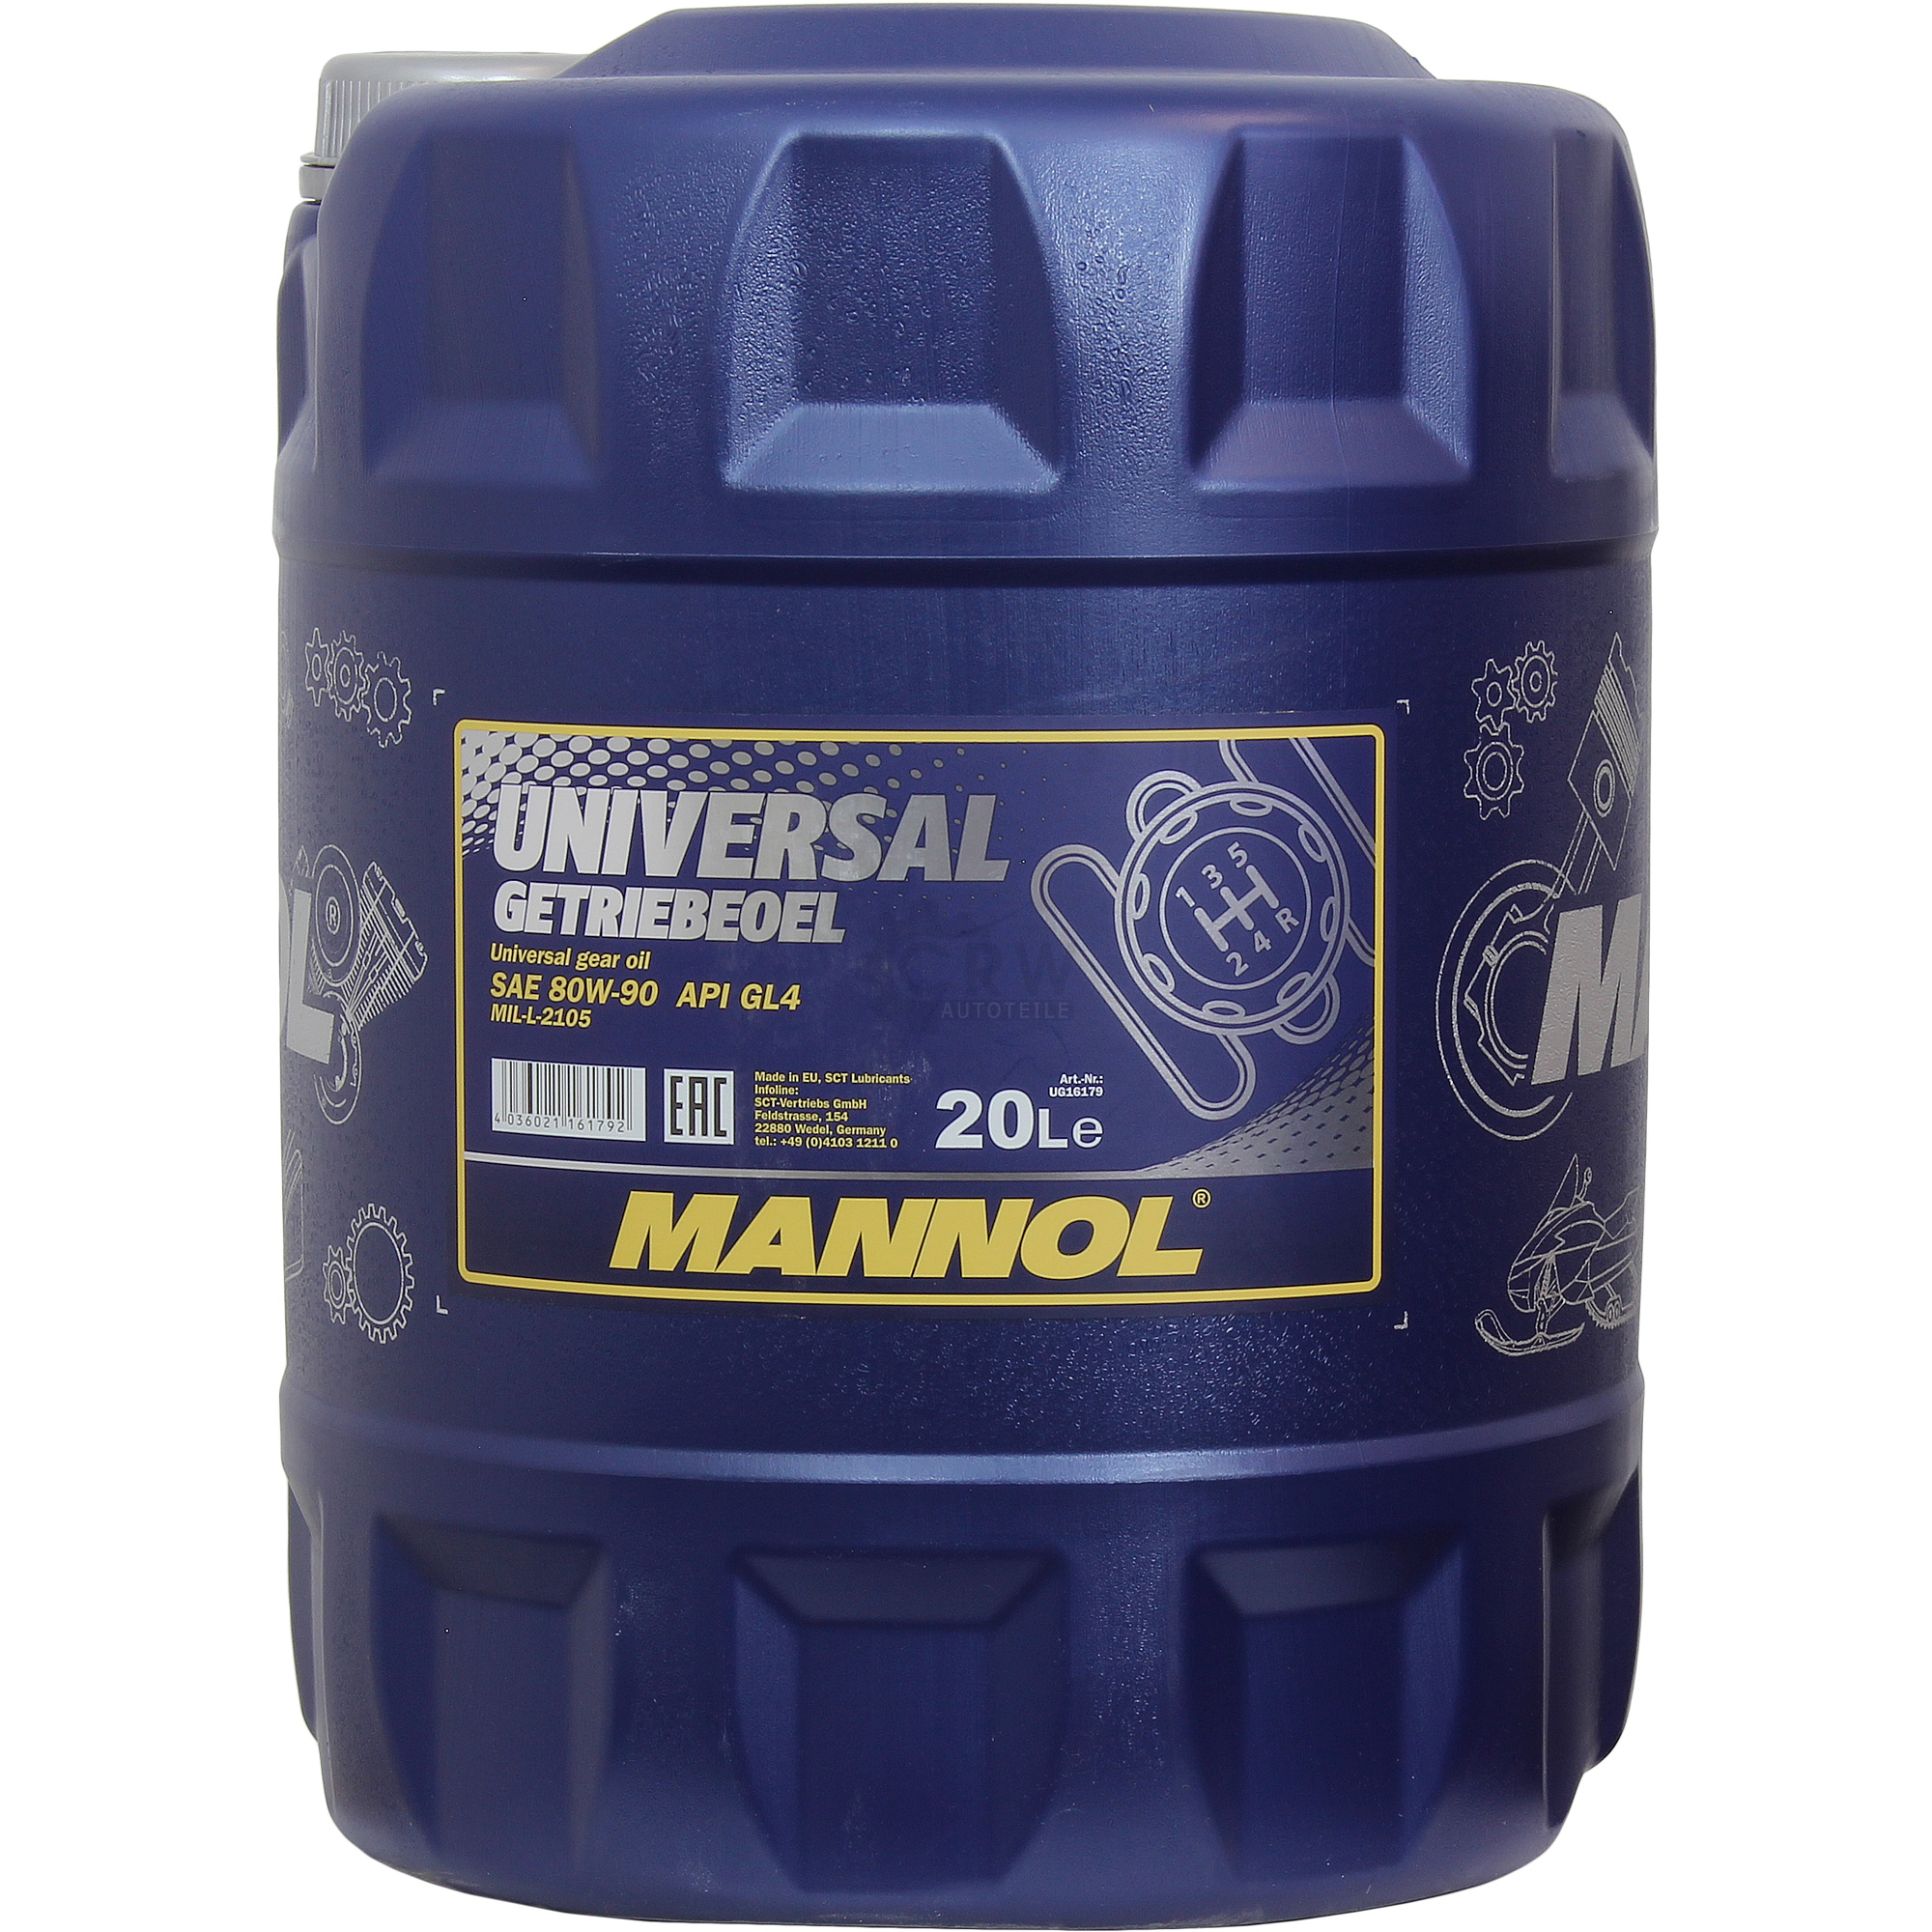 MANNOL 1x20 Liter Universal Getriebeöl 80W-90 API GL 4 MN8107-20